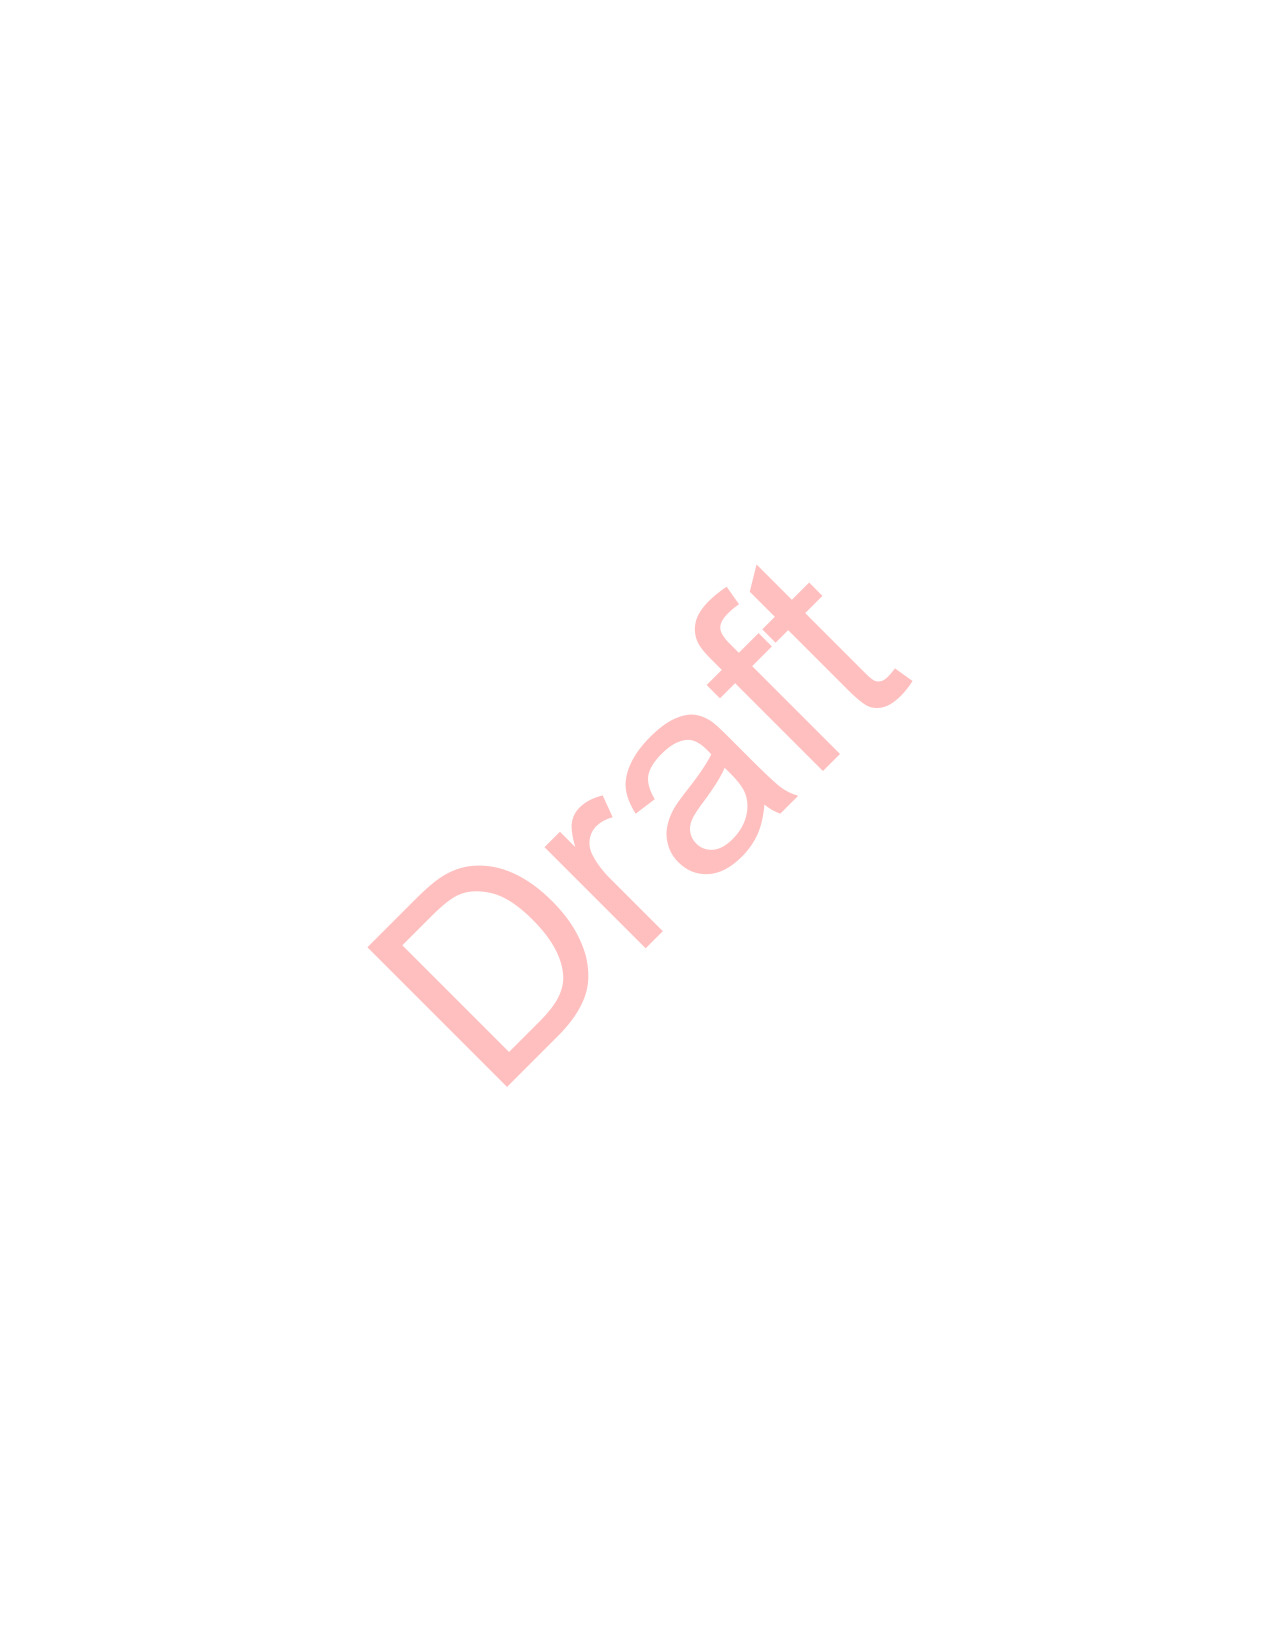 Draft 